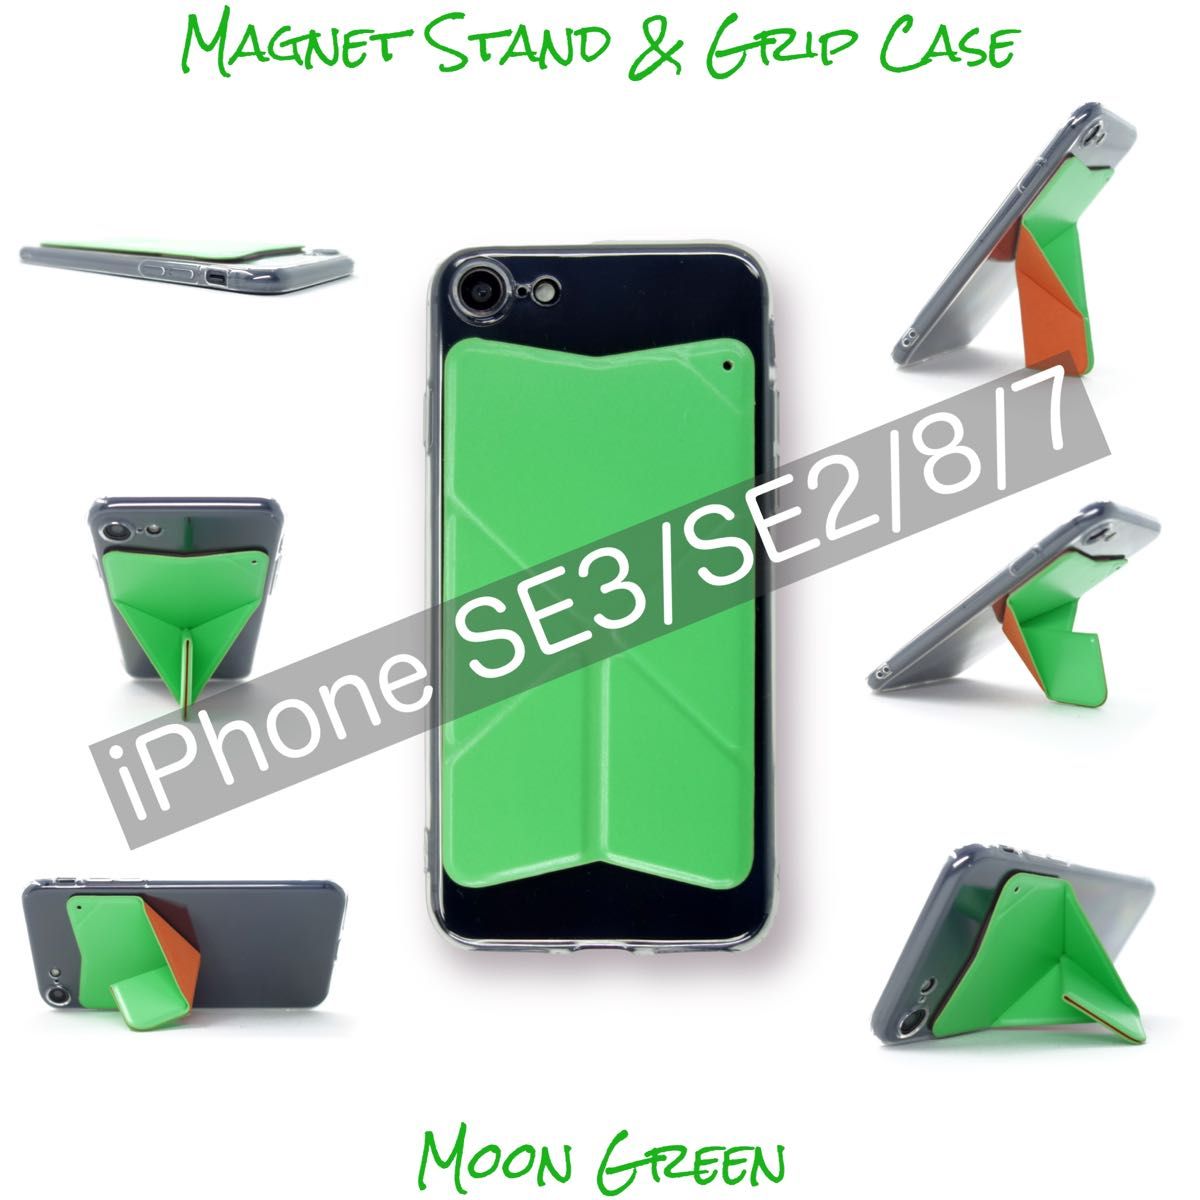 iPhone ケース SE3 SE2 8 7 スマホスタンド スマホグリップ マグネット内蔵 ワイヤレス充電OK ムーングリーン